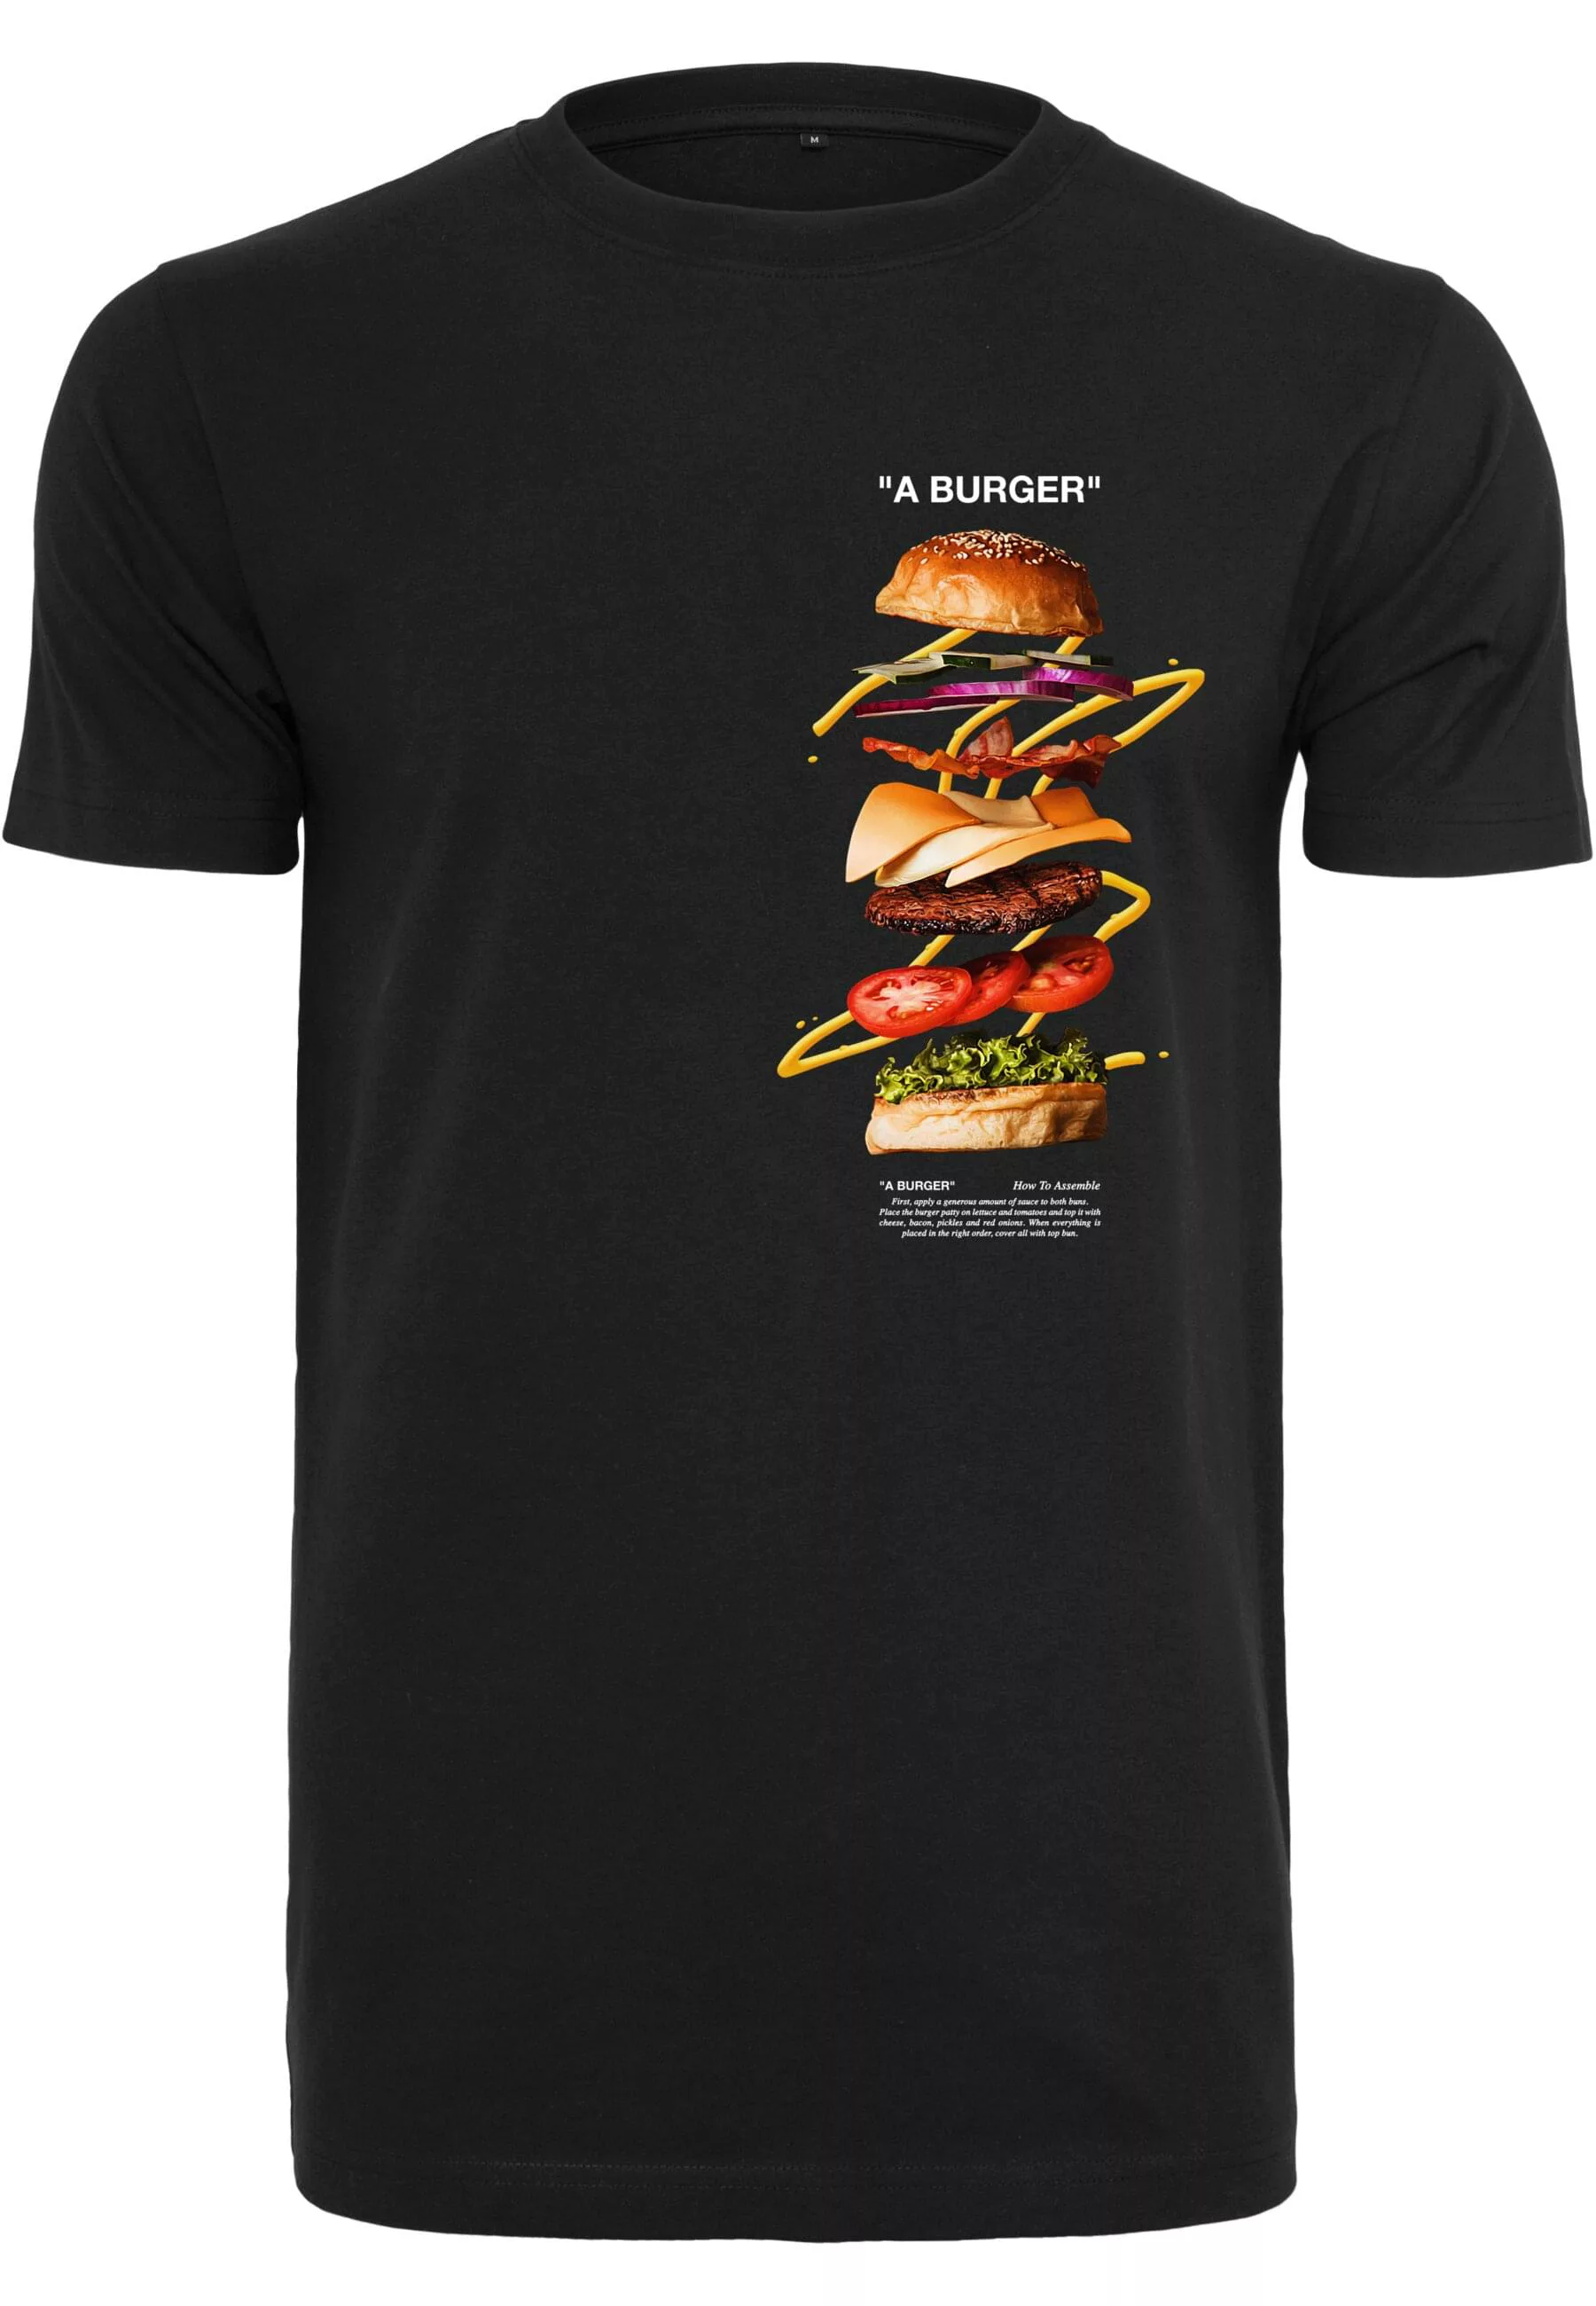 MisterTee T-Shirt "MisterTee Herren A Burger Tee" günstig online kaufen